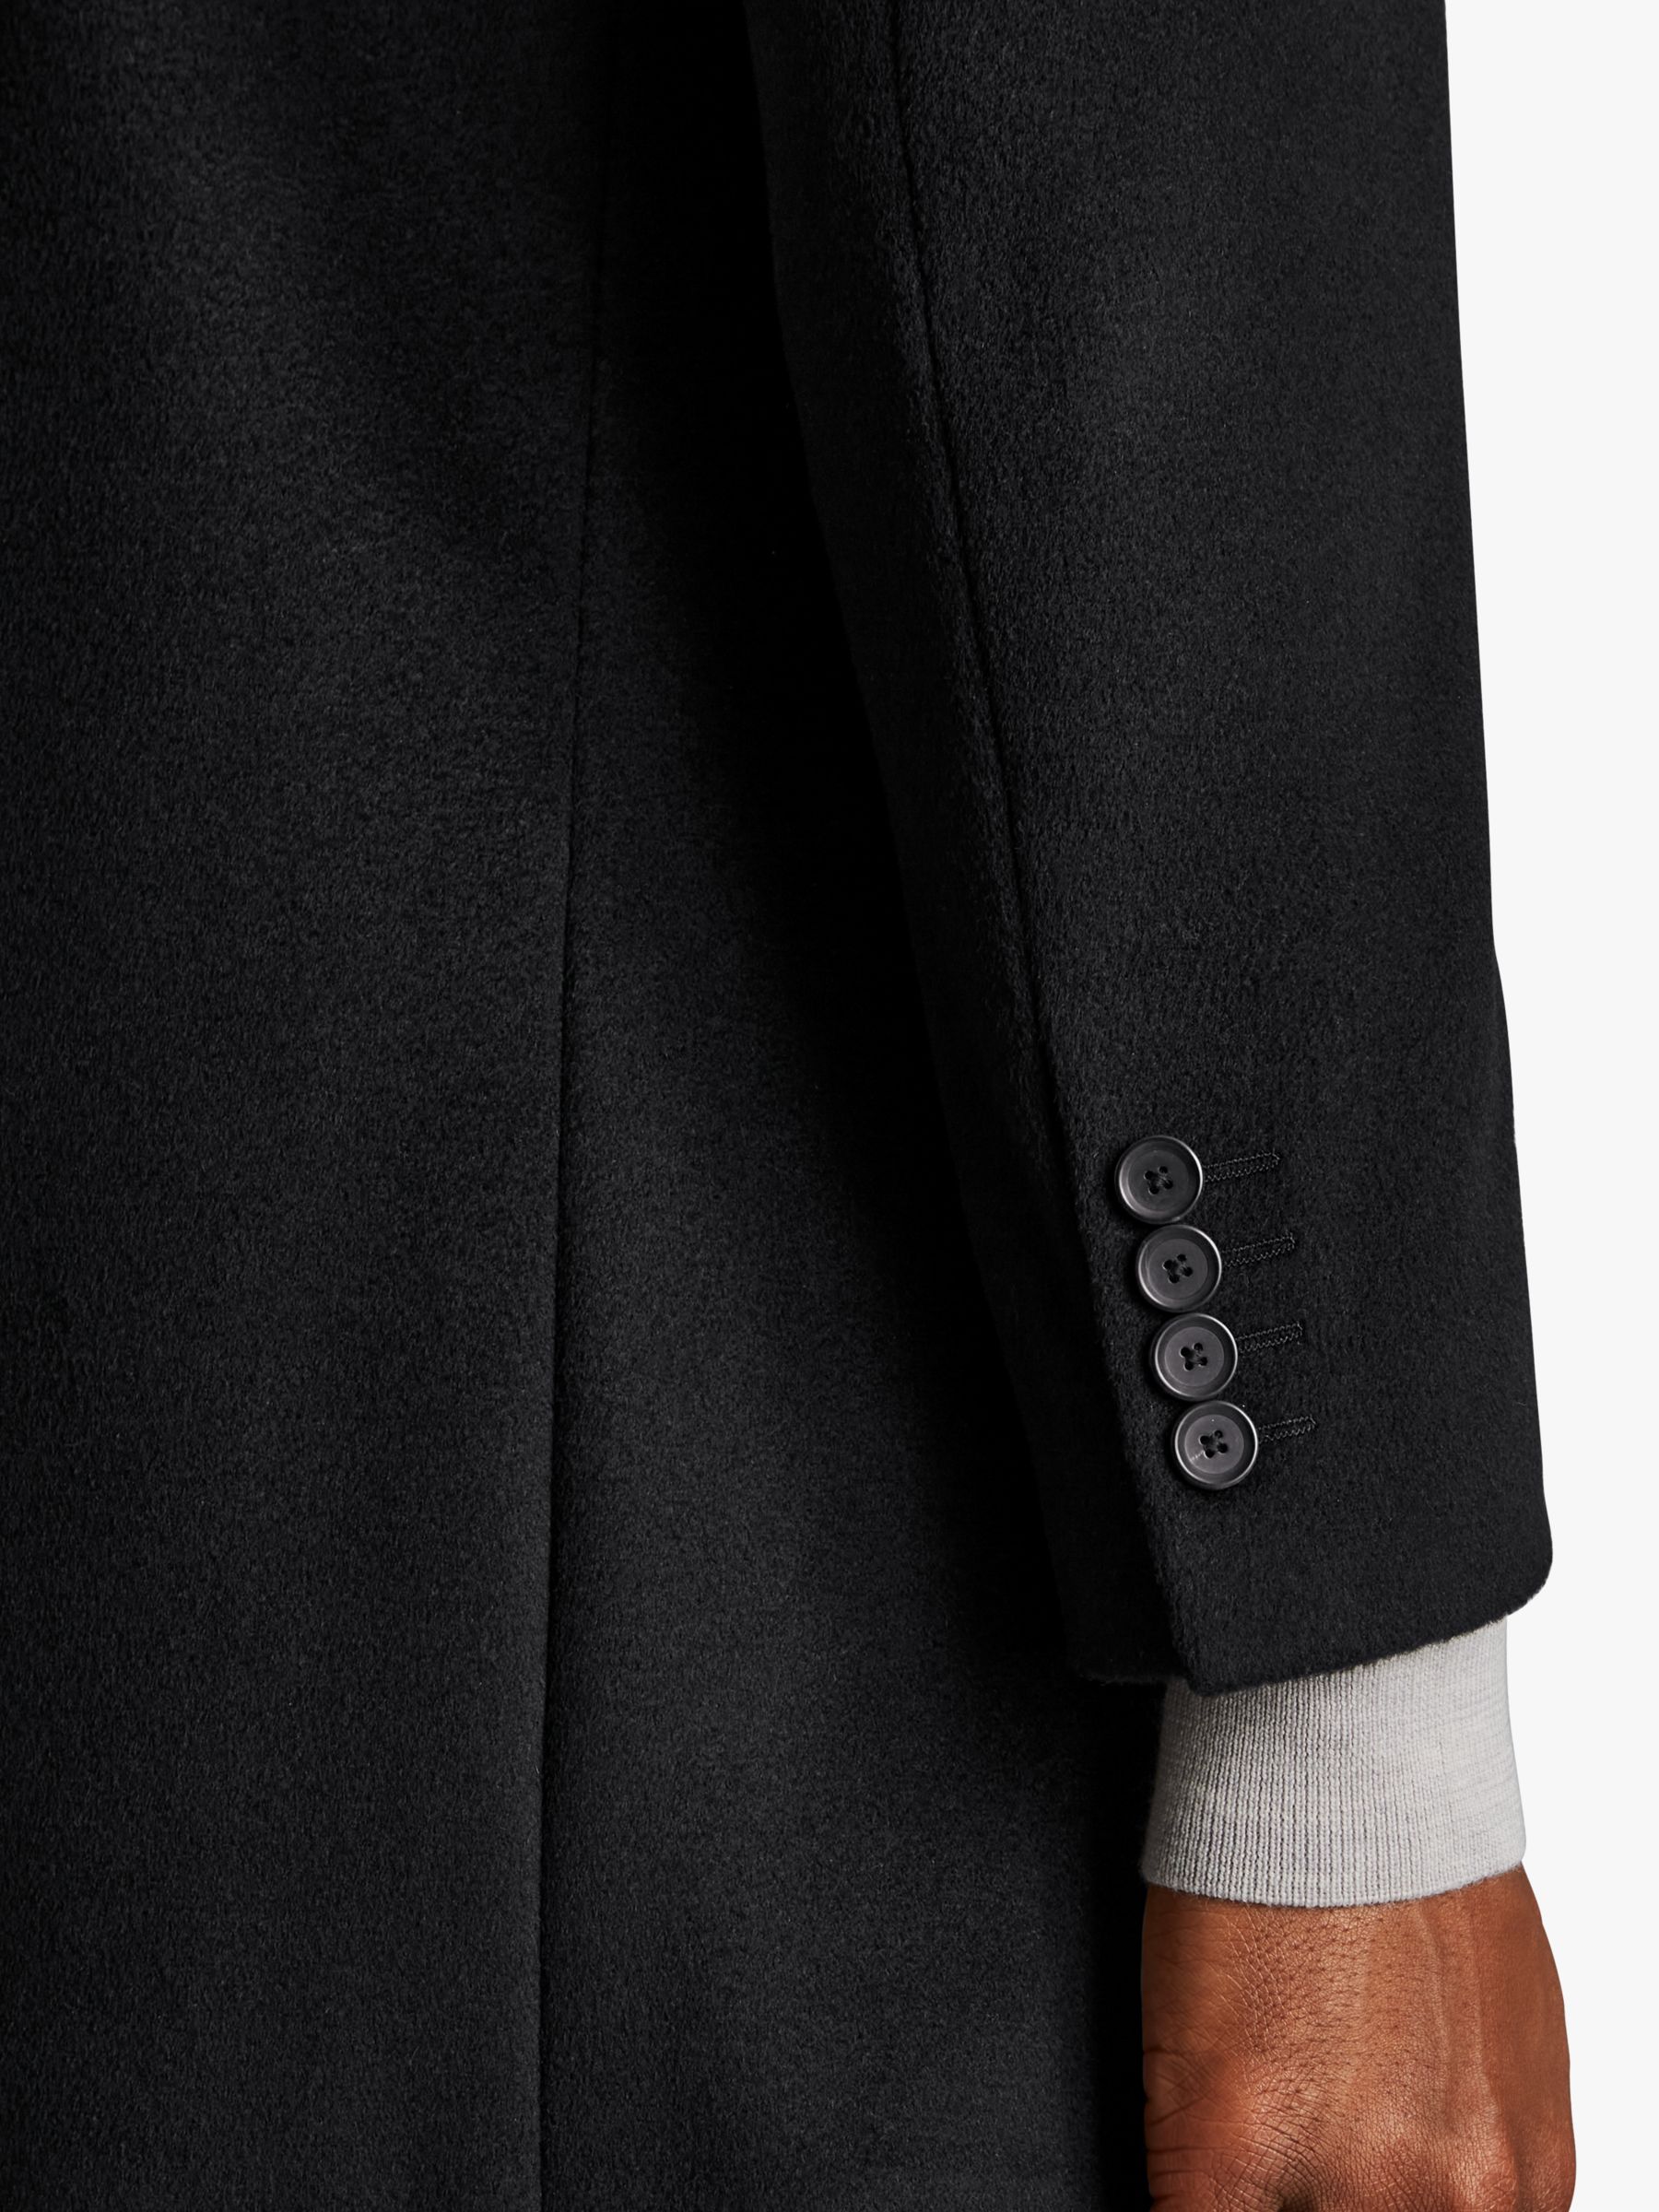 Charles Tyrwhitt Merino Wool Overcoat, Black, 36R